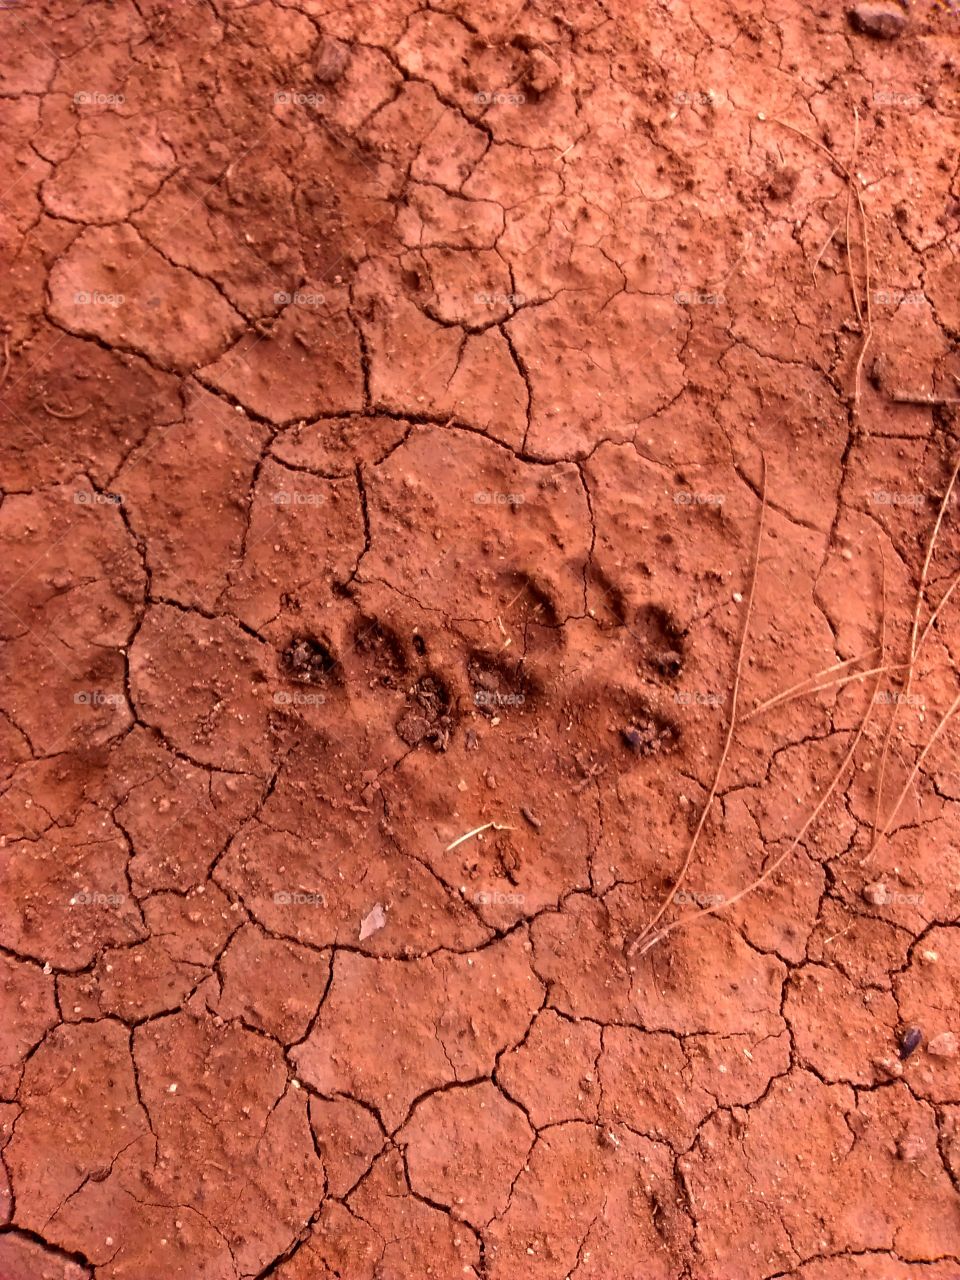 Dog paw prints dried in mud